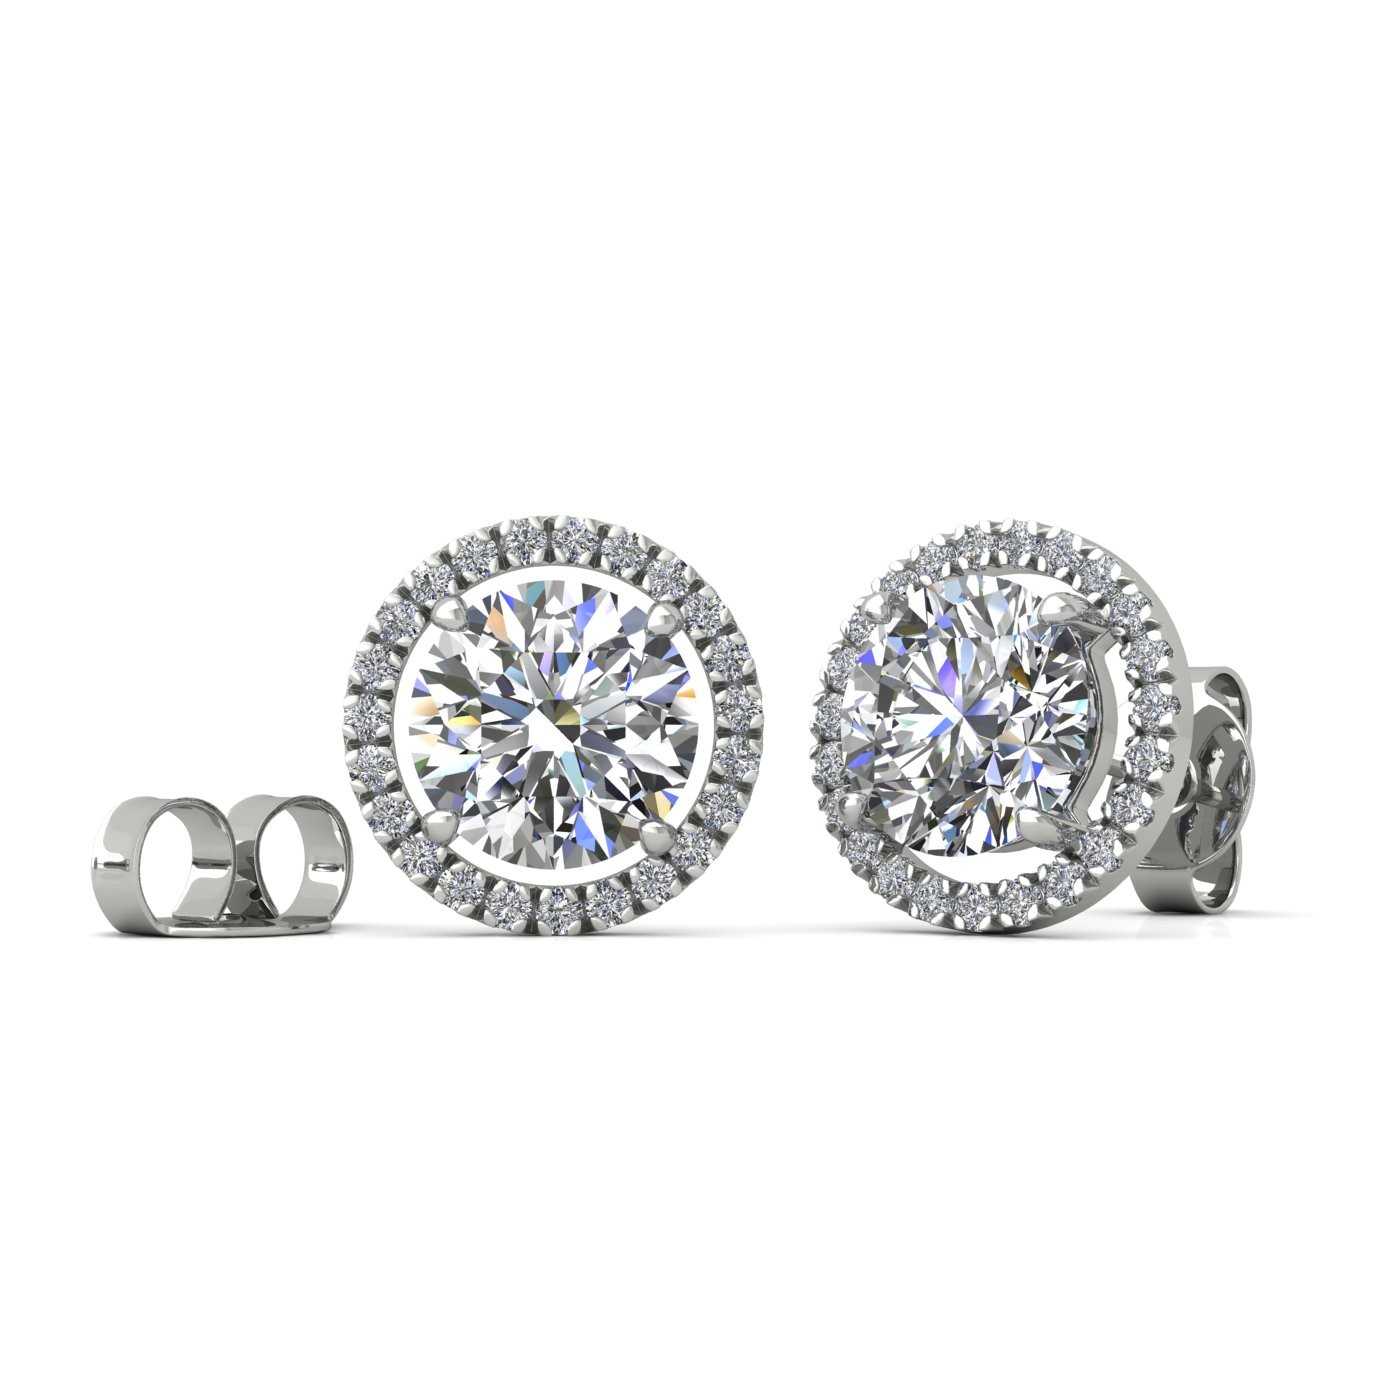 18k white gold  0,7 ct each (1,4 tcw) 4 prongs round brilliant cut halo diamond earring studs